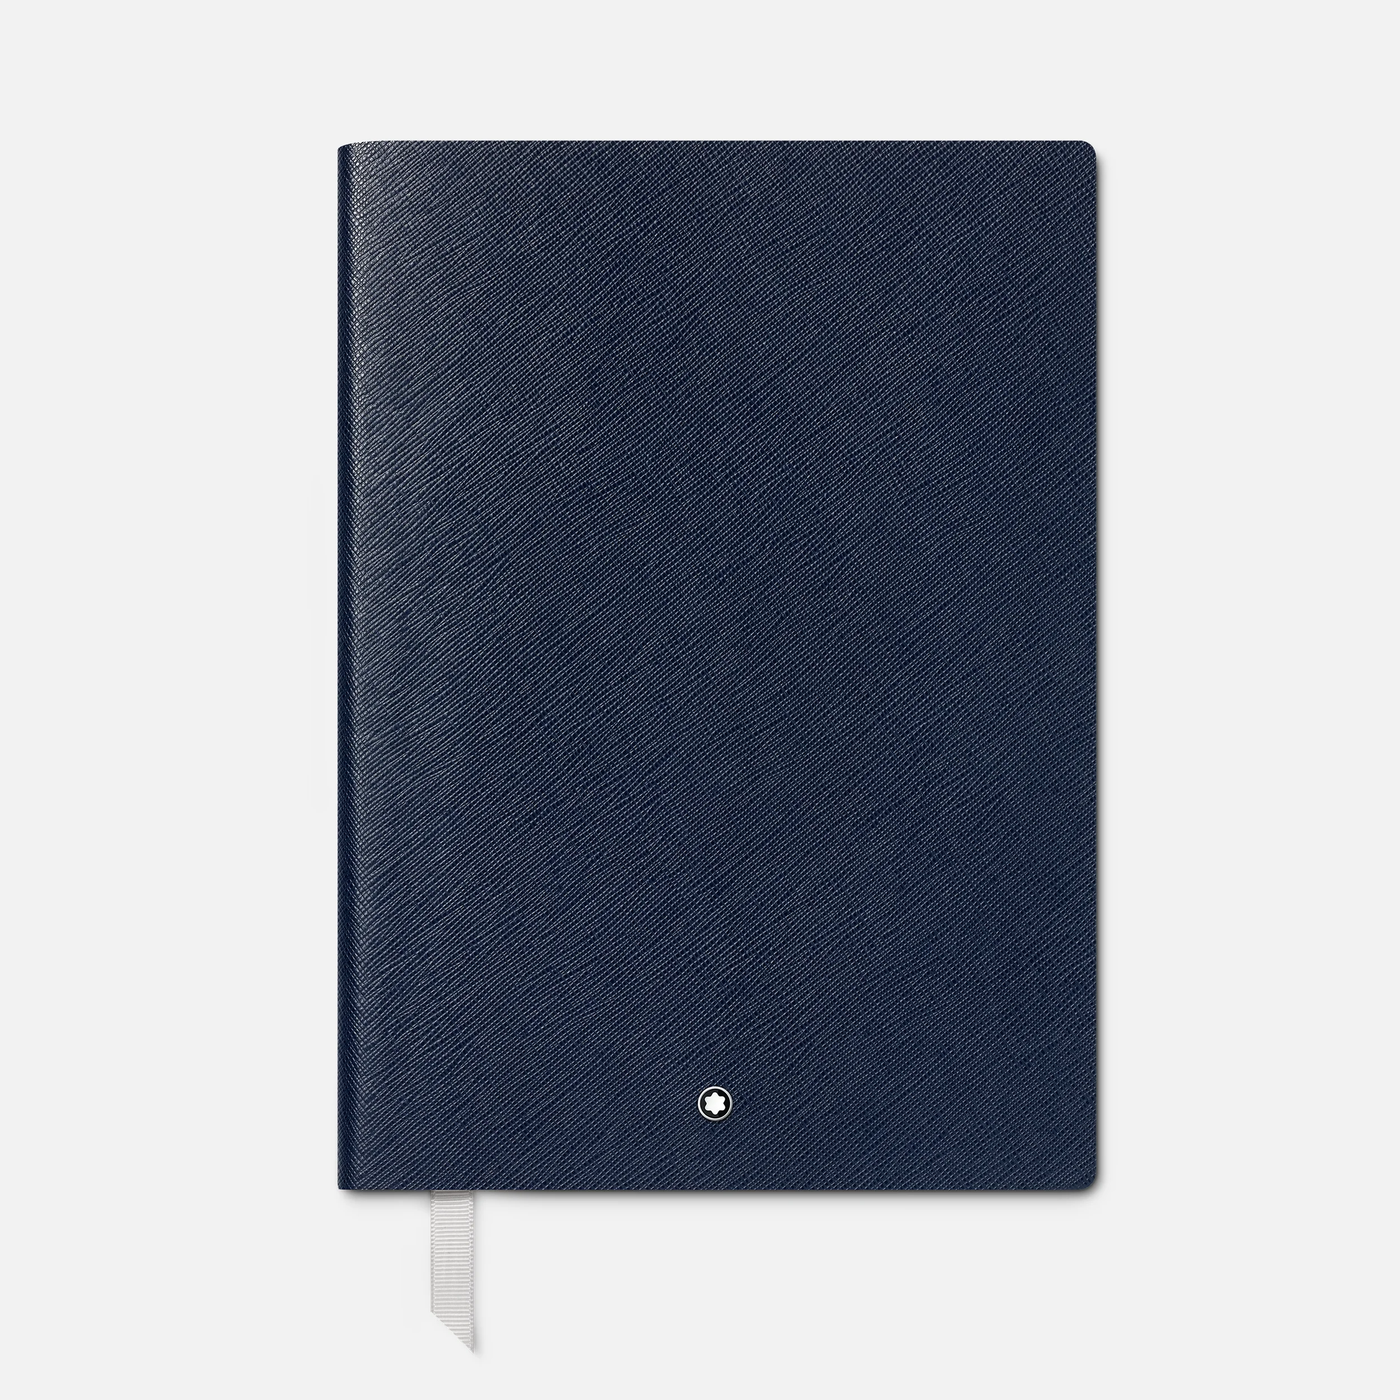 Montblanc Fine Stationery Notebook #163 Medium Indigo Blue Lined Notebook